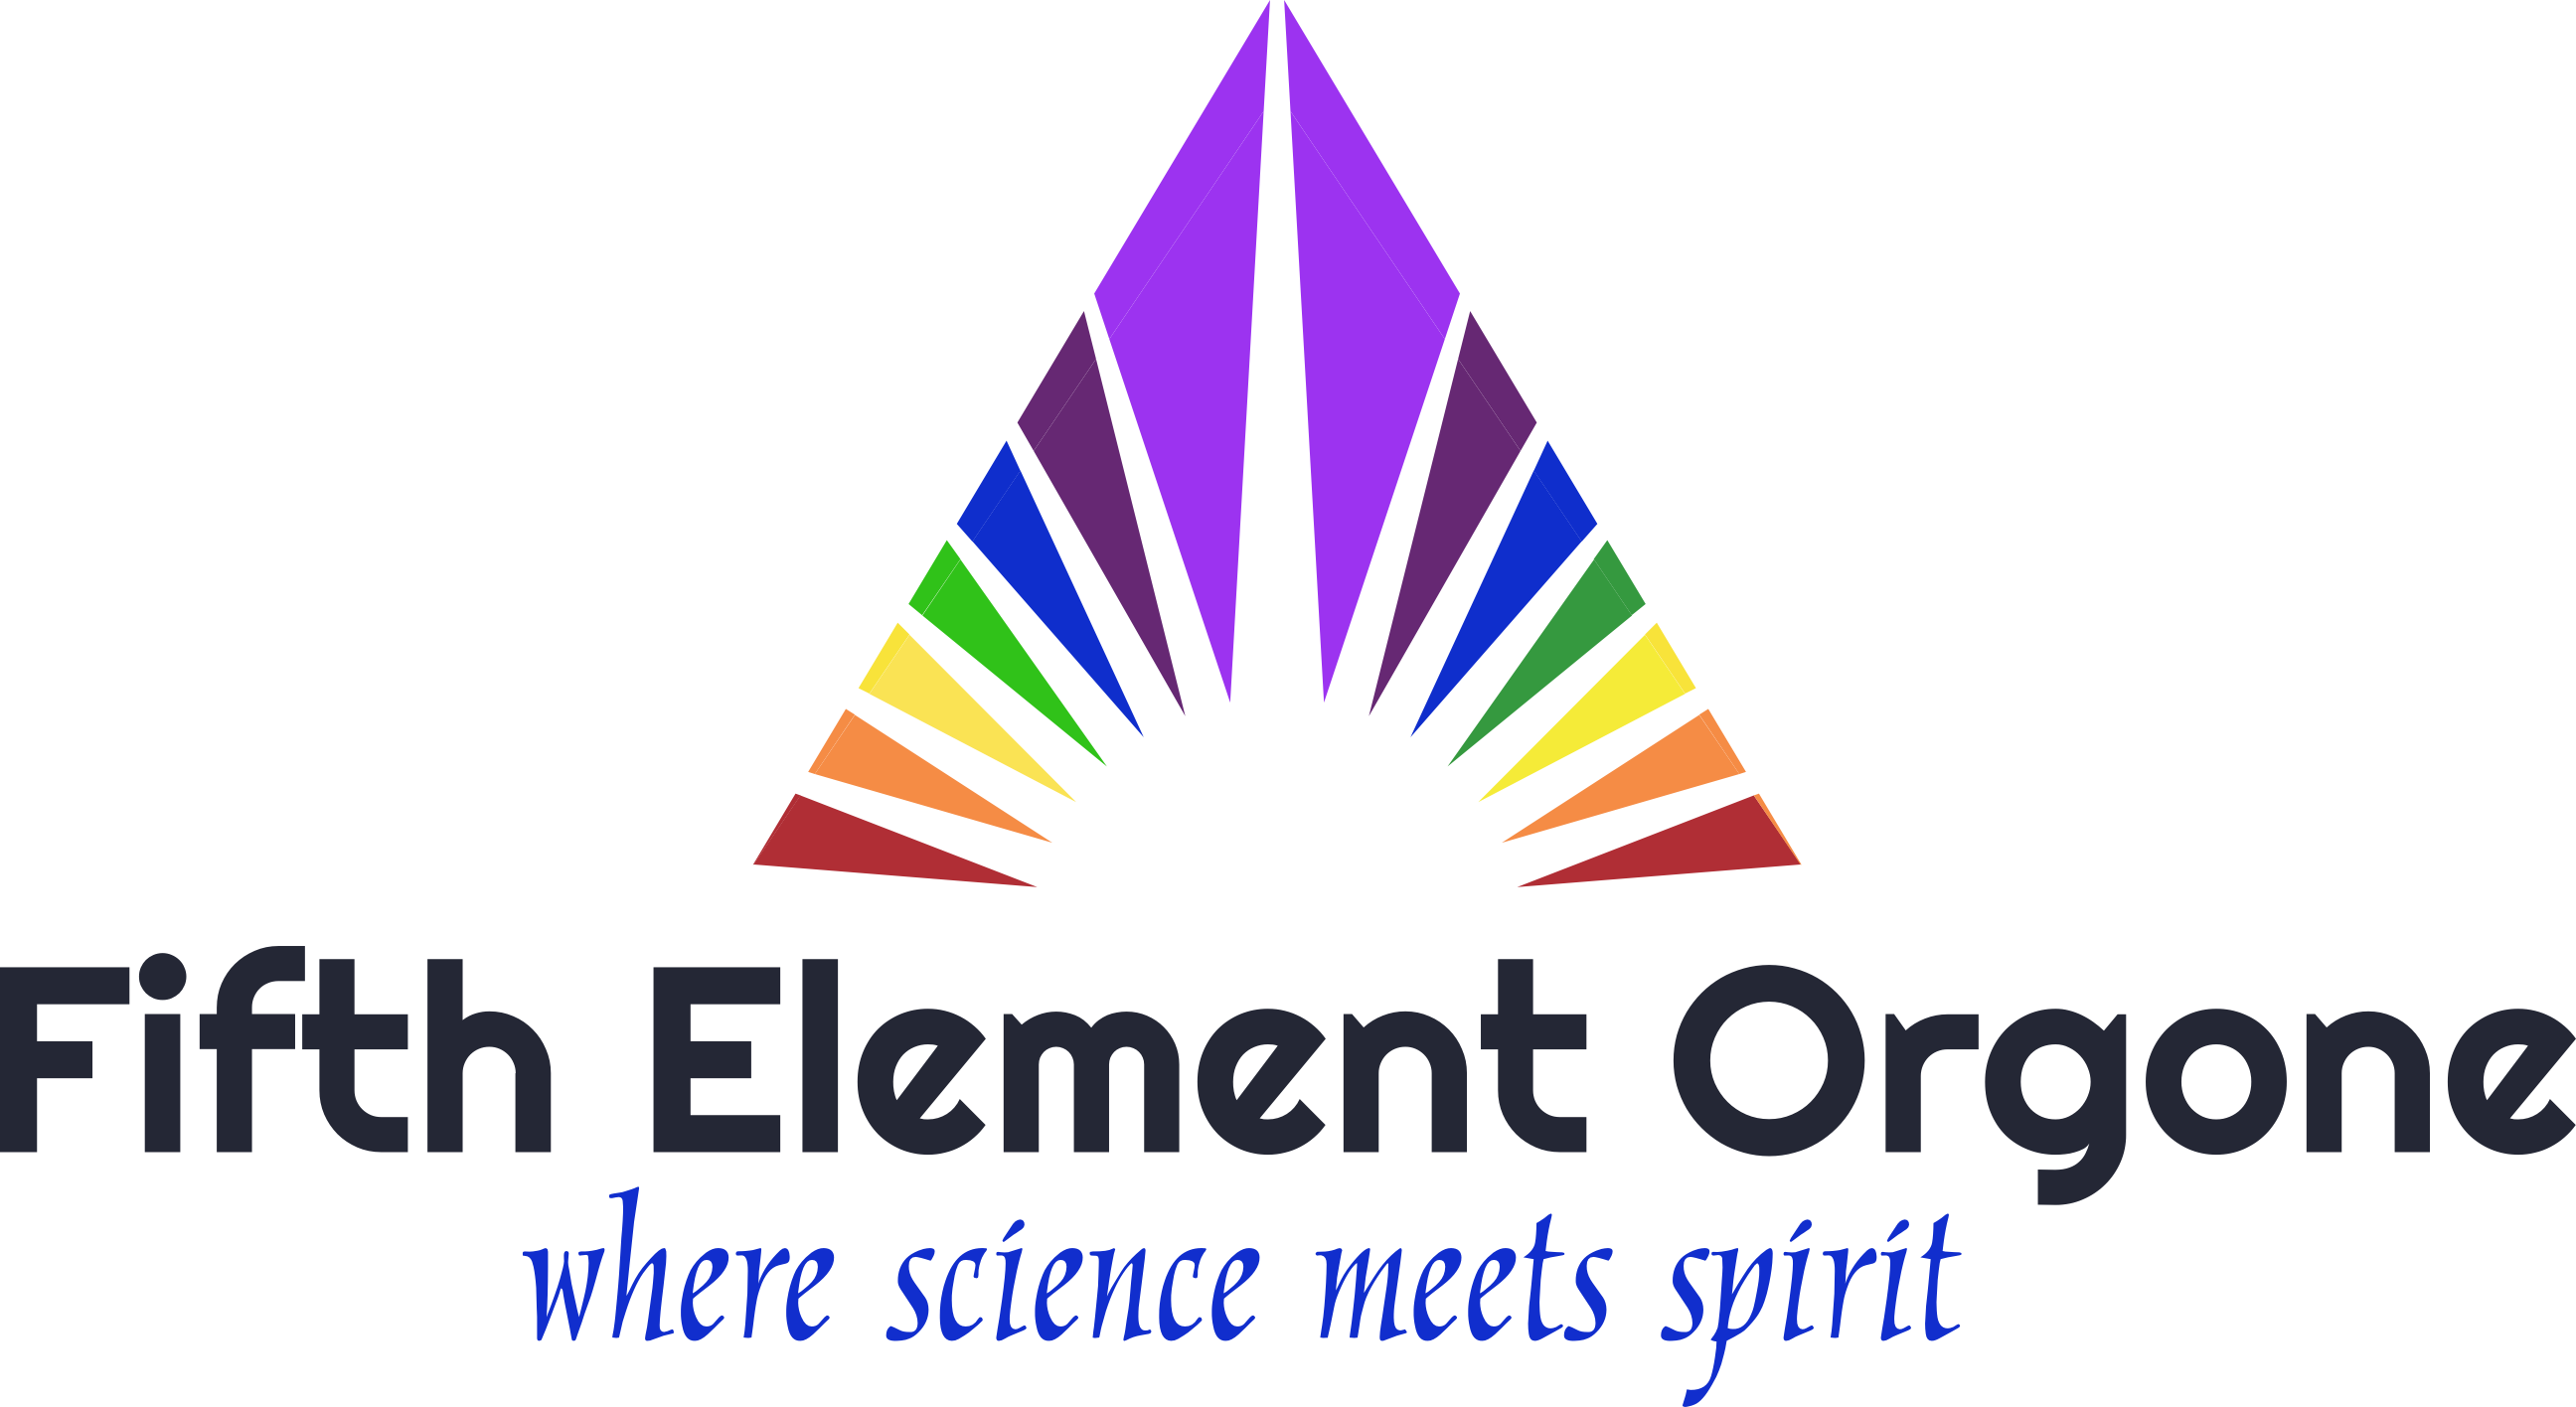 Fifth Element Orgone Logo